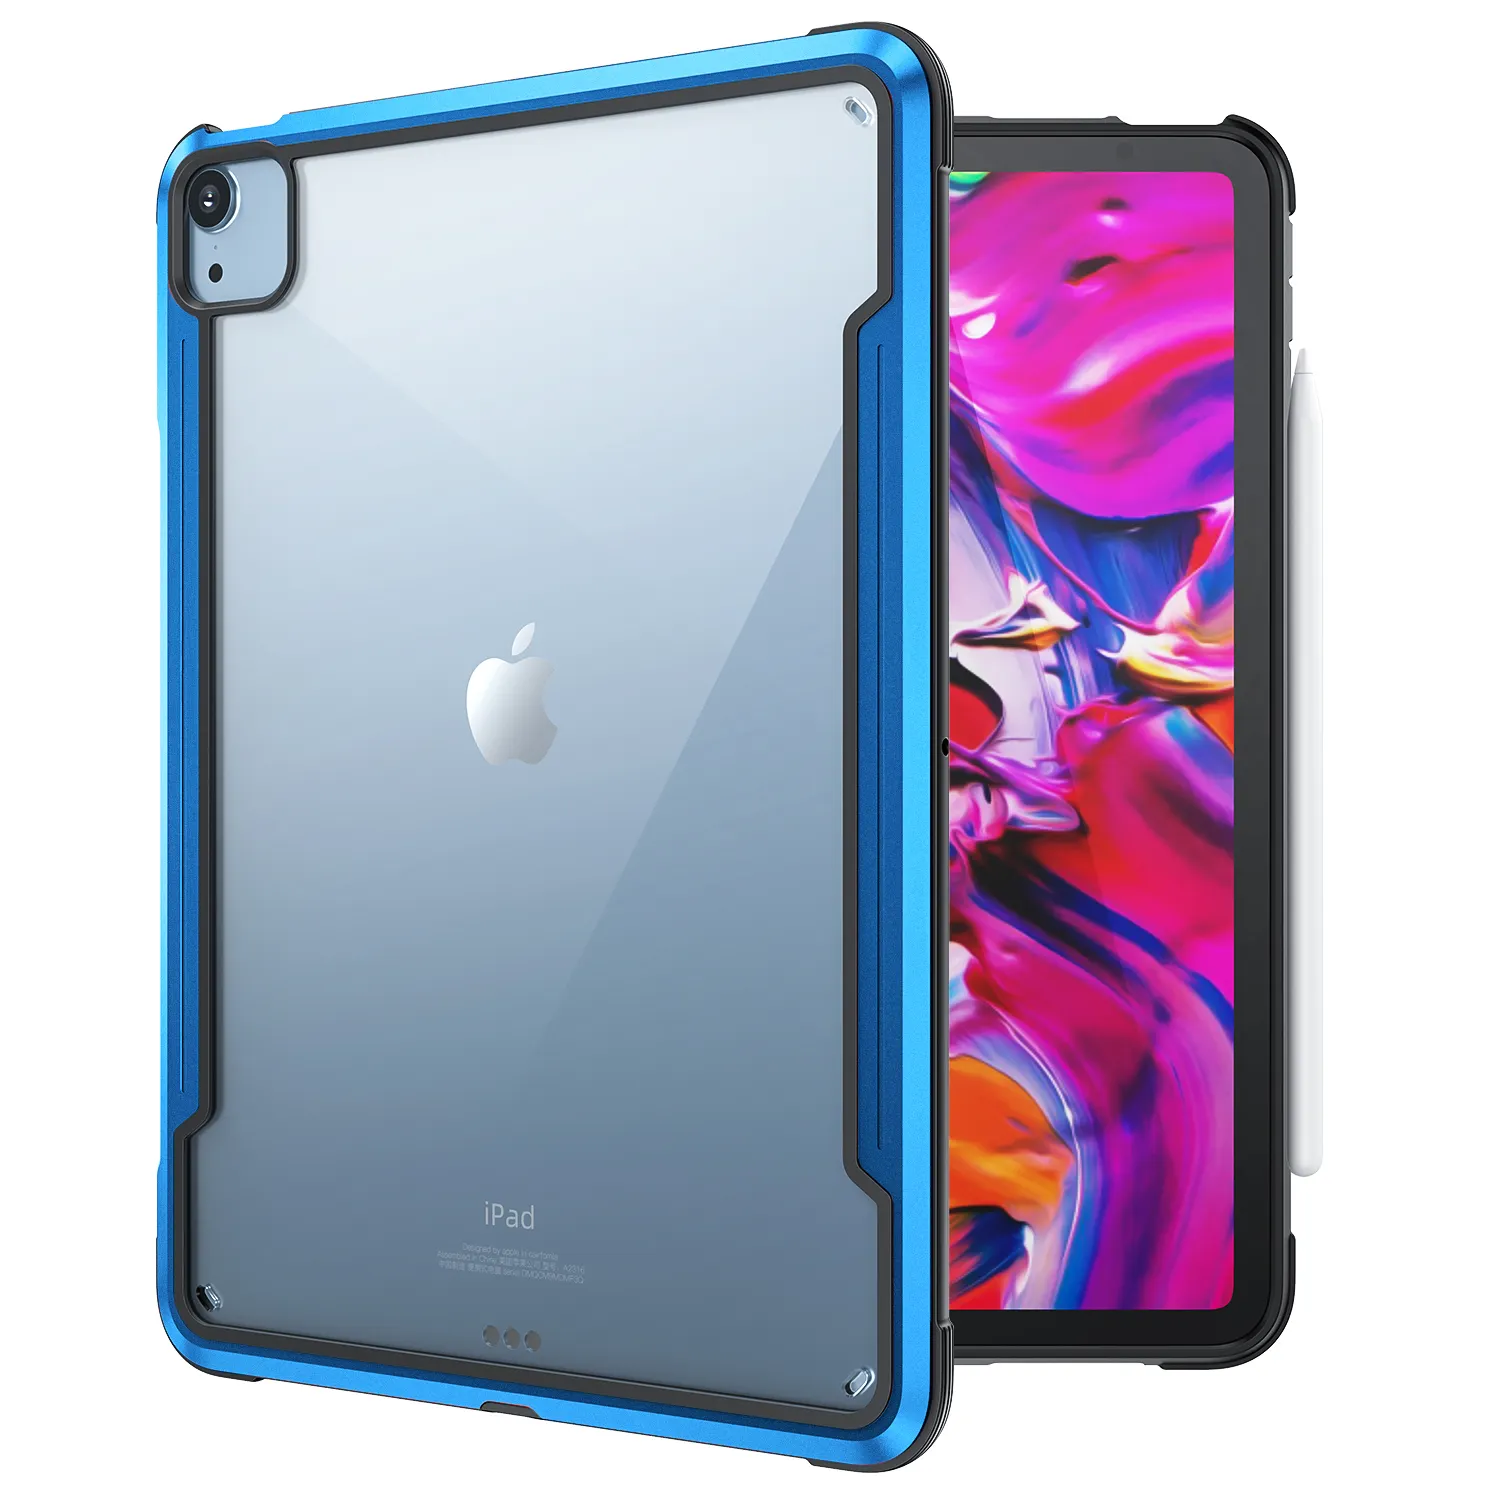 Sarung iPad Air4, sarung HP transparan Klasik anti syok 10.9 inci